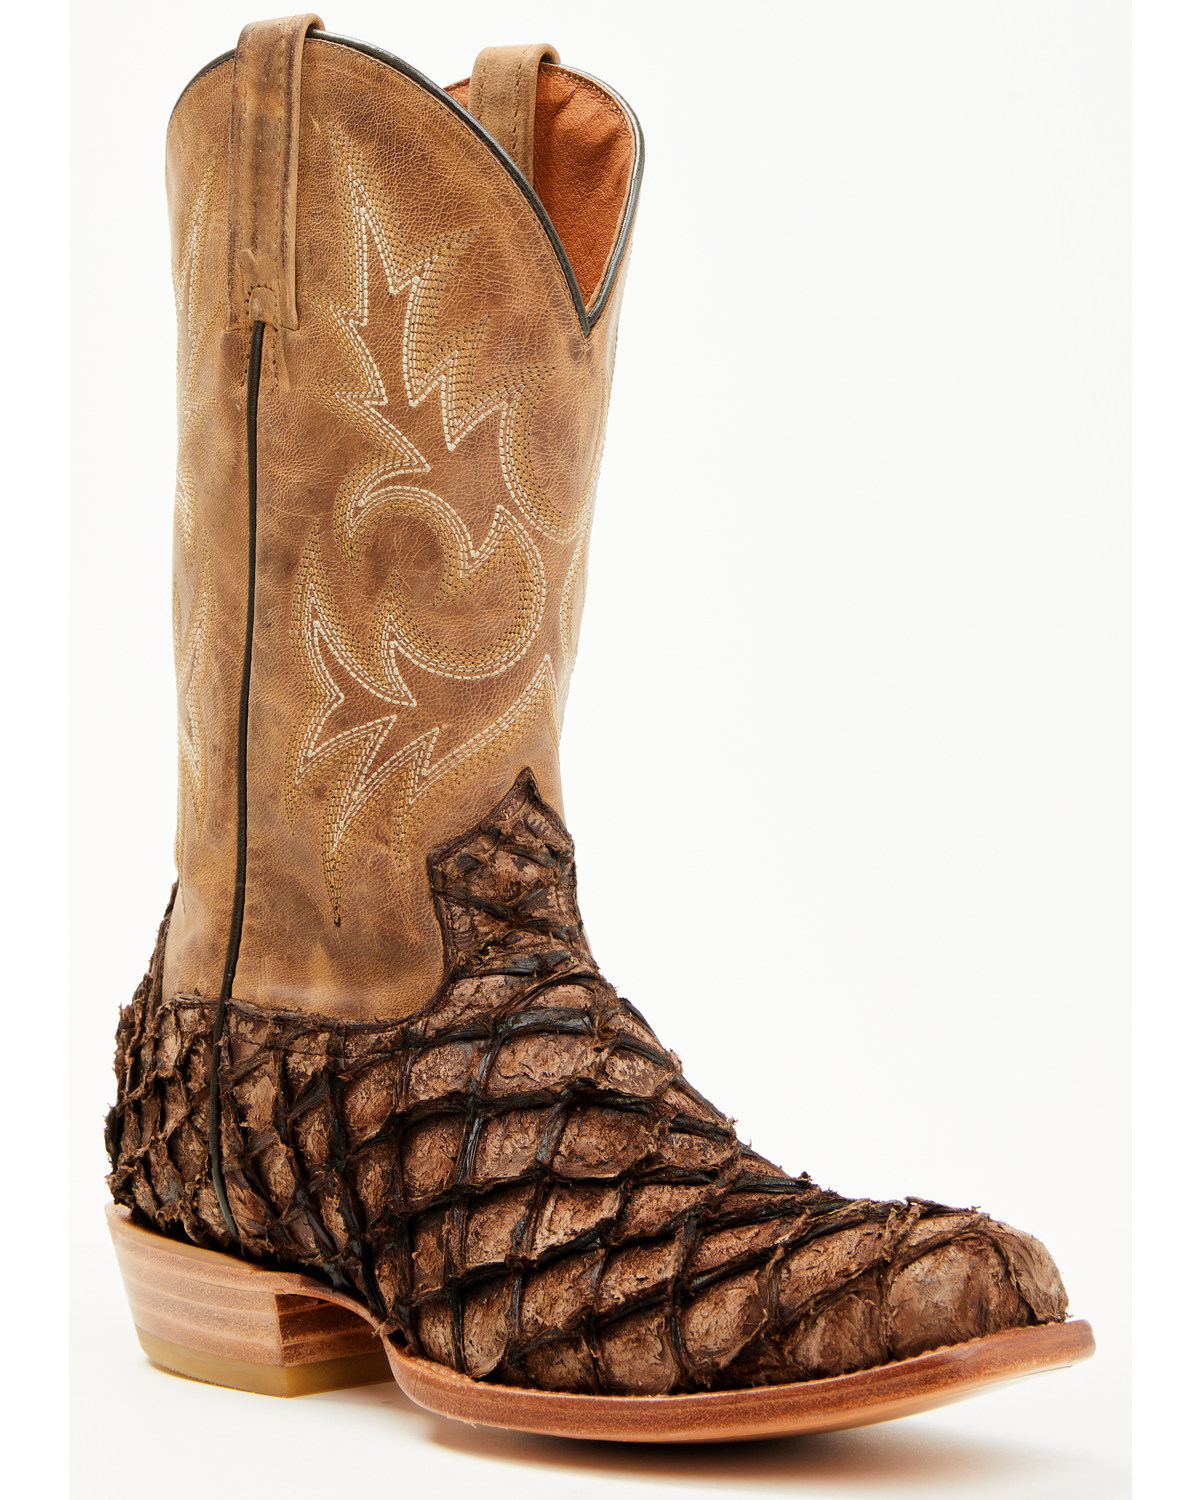 Cody James Men's Vaqueras Exotic Pirarucu Western Boots - Square Toe